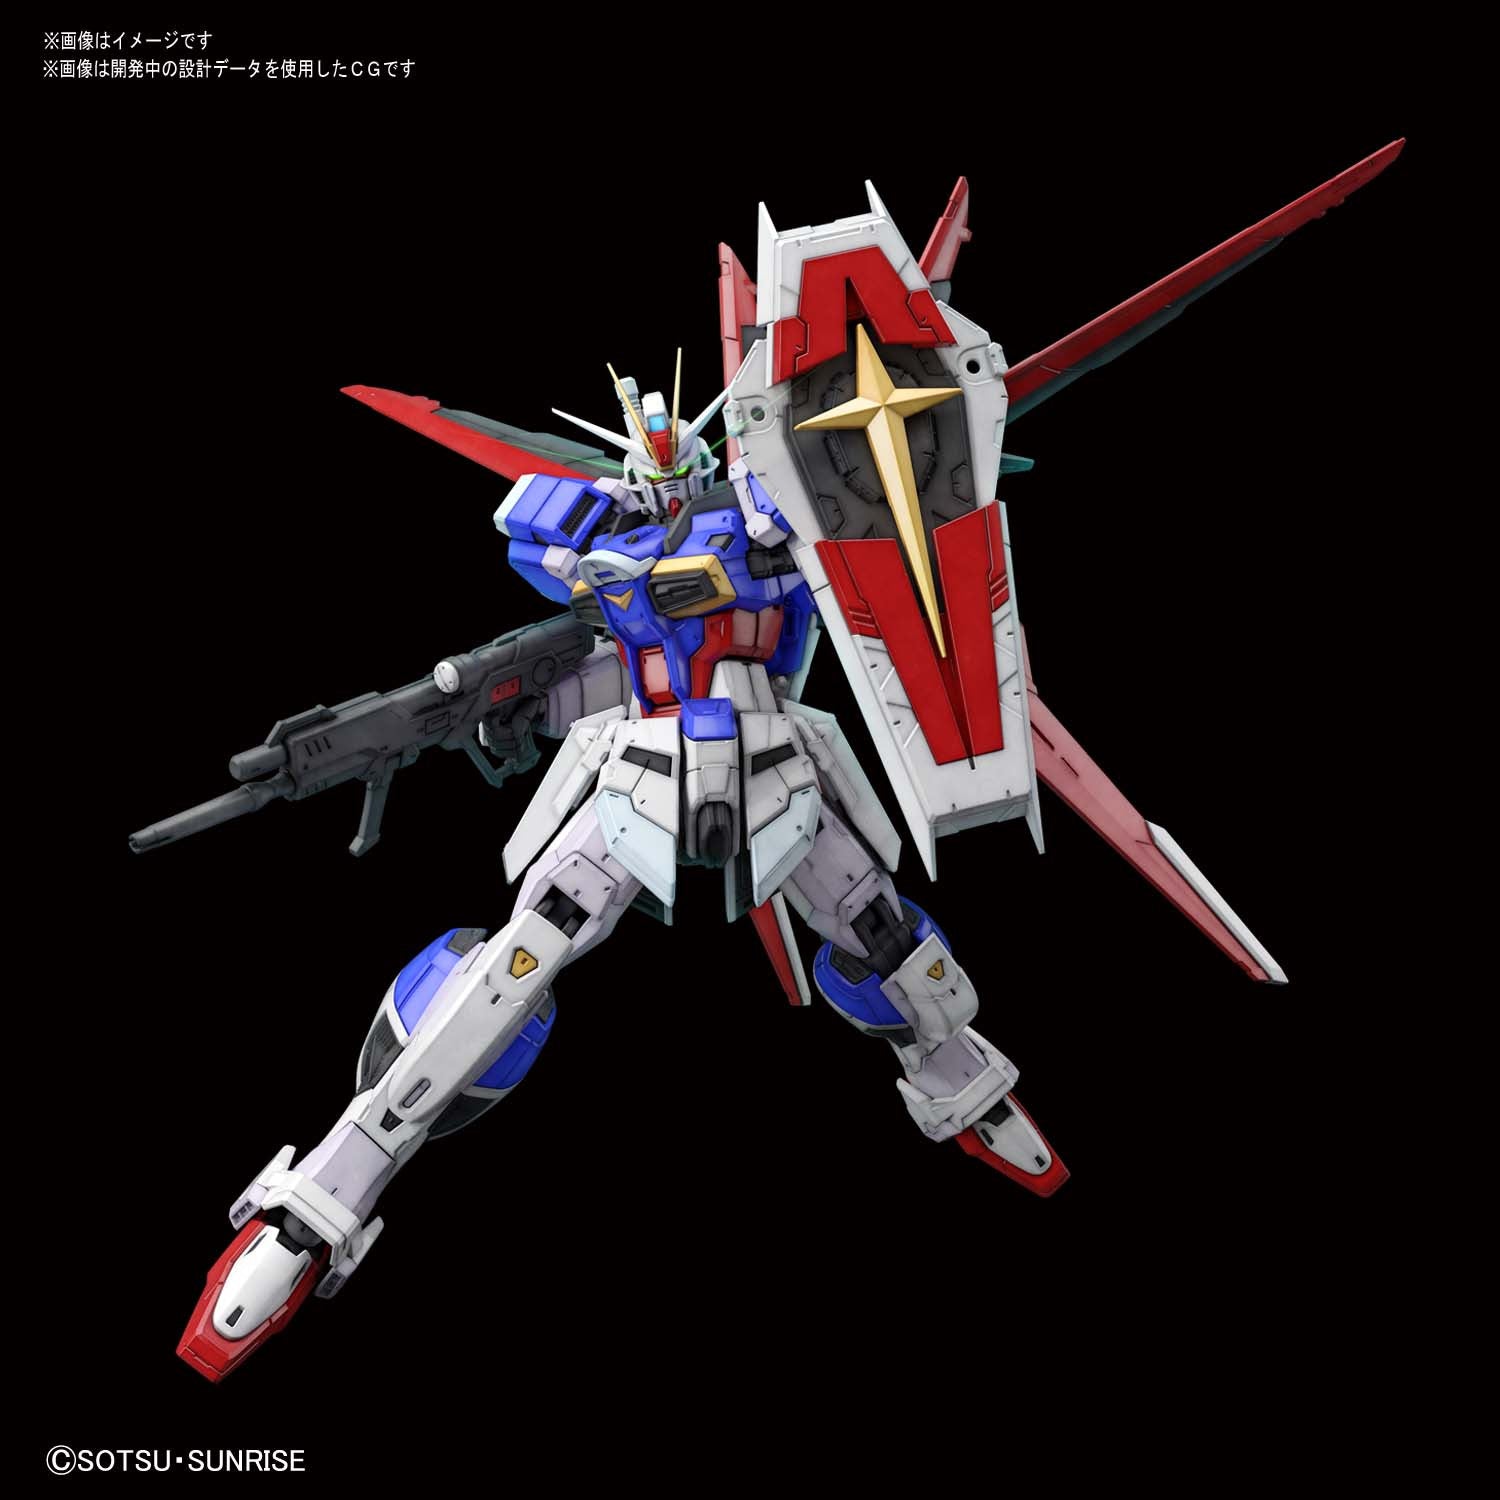 RG Force Impulse Gundam